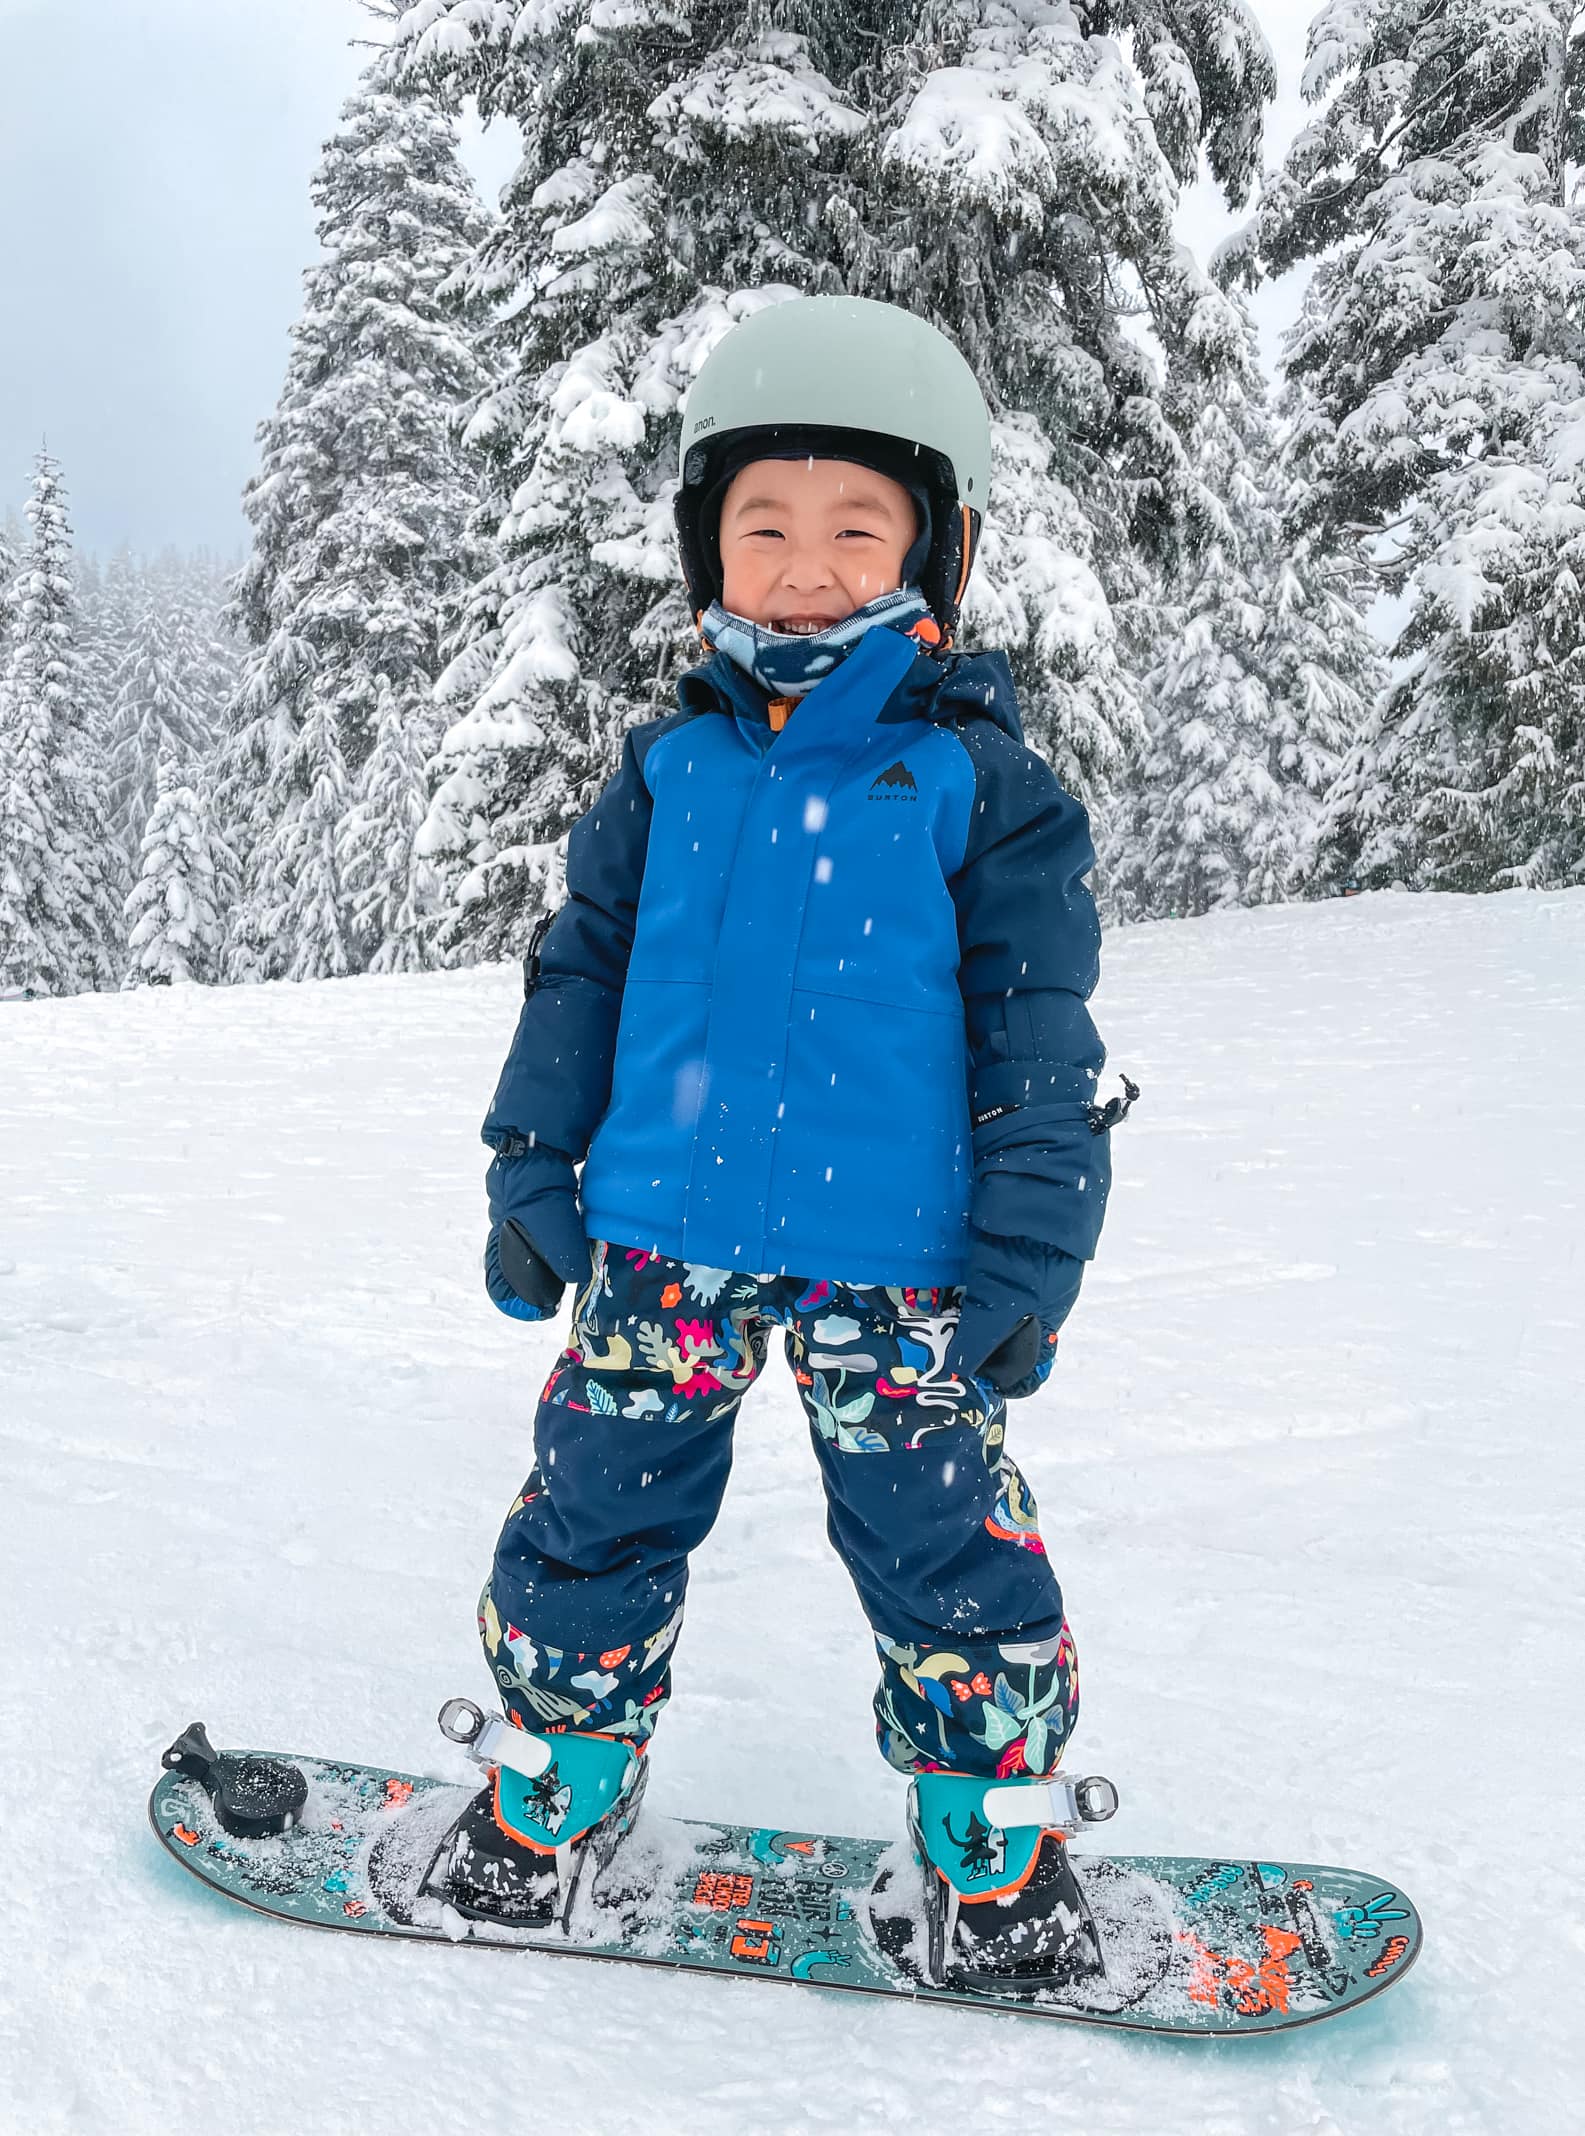 Vestes de snowboarding enfant | Burton Snowboards FR